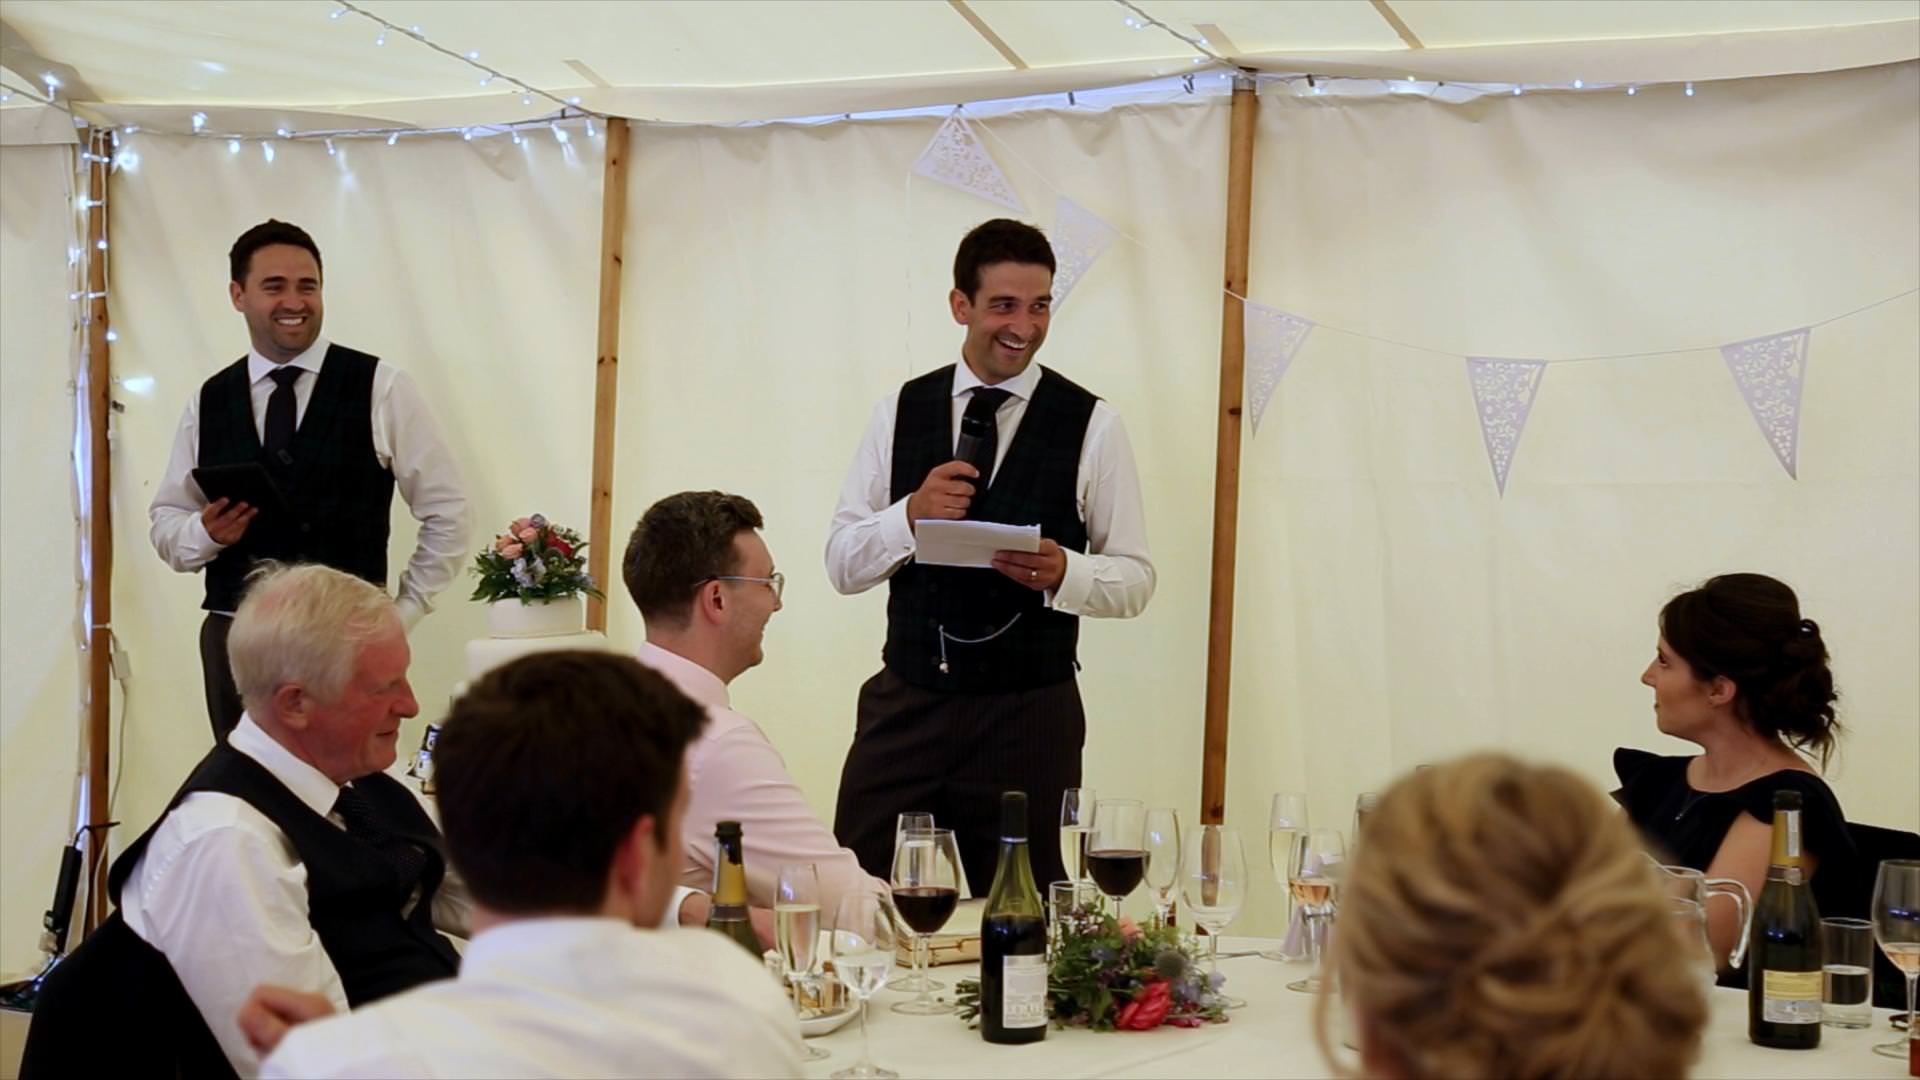 best men laugh inside tipi wedding reception